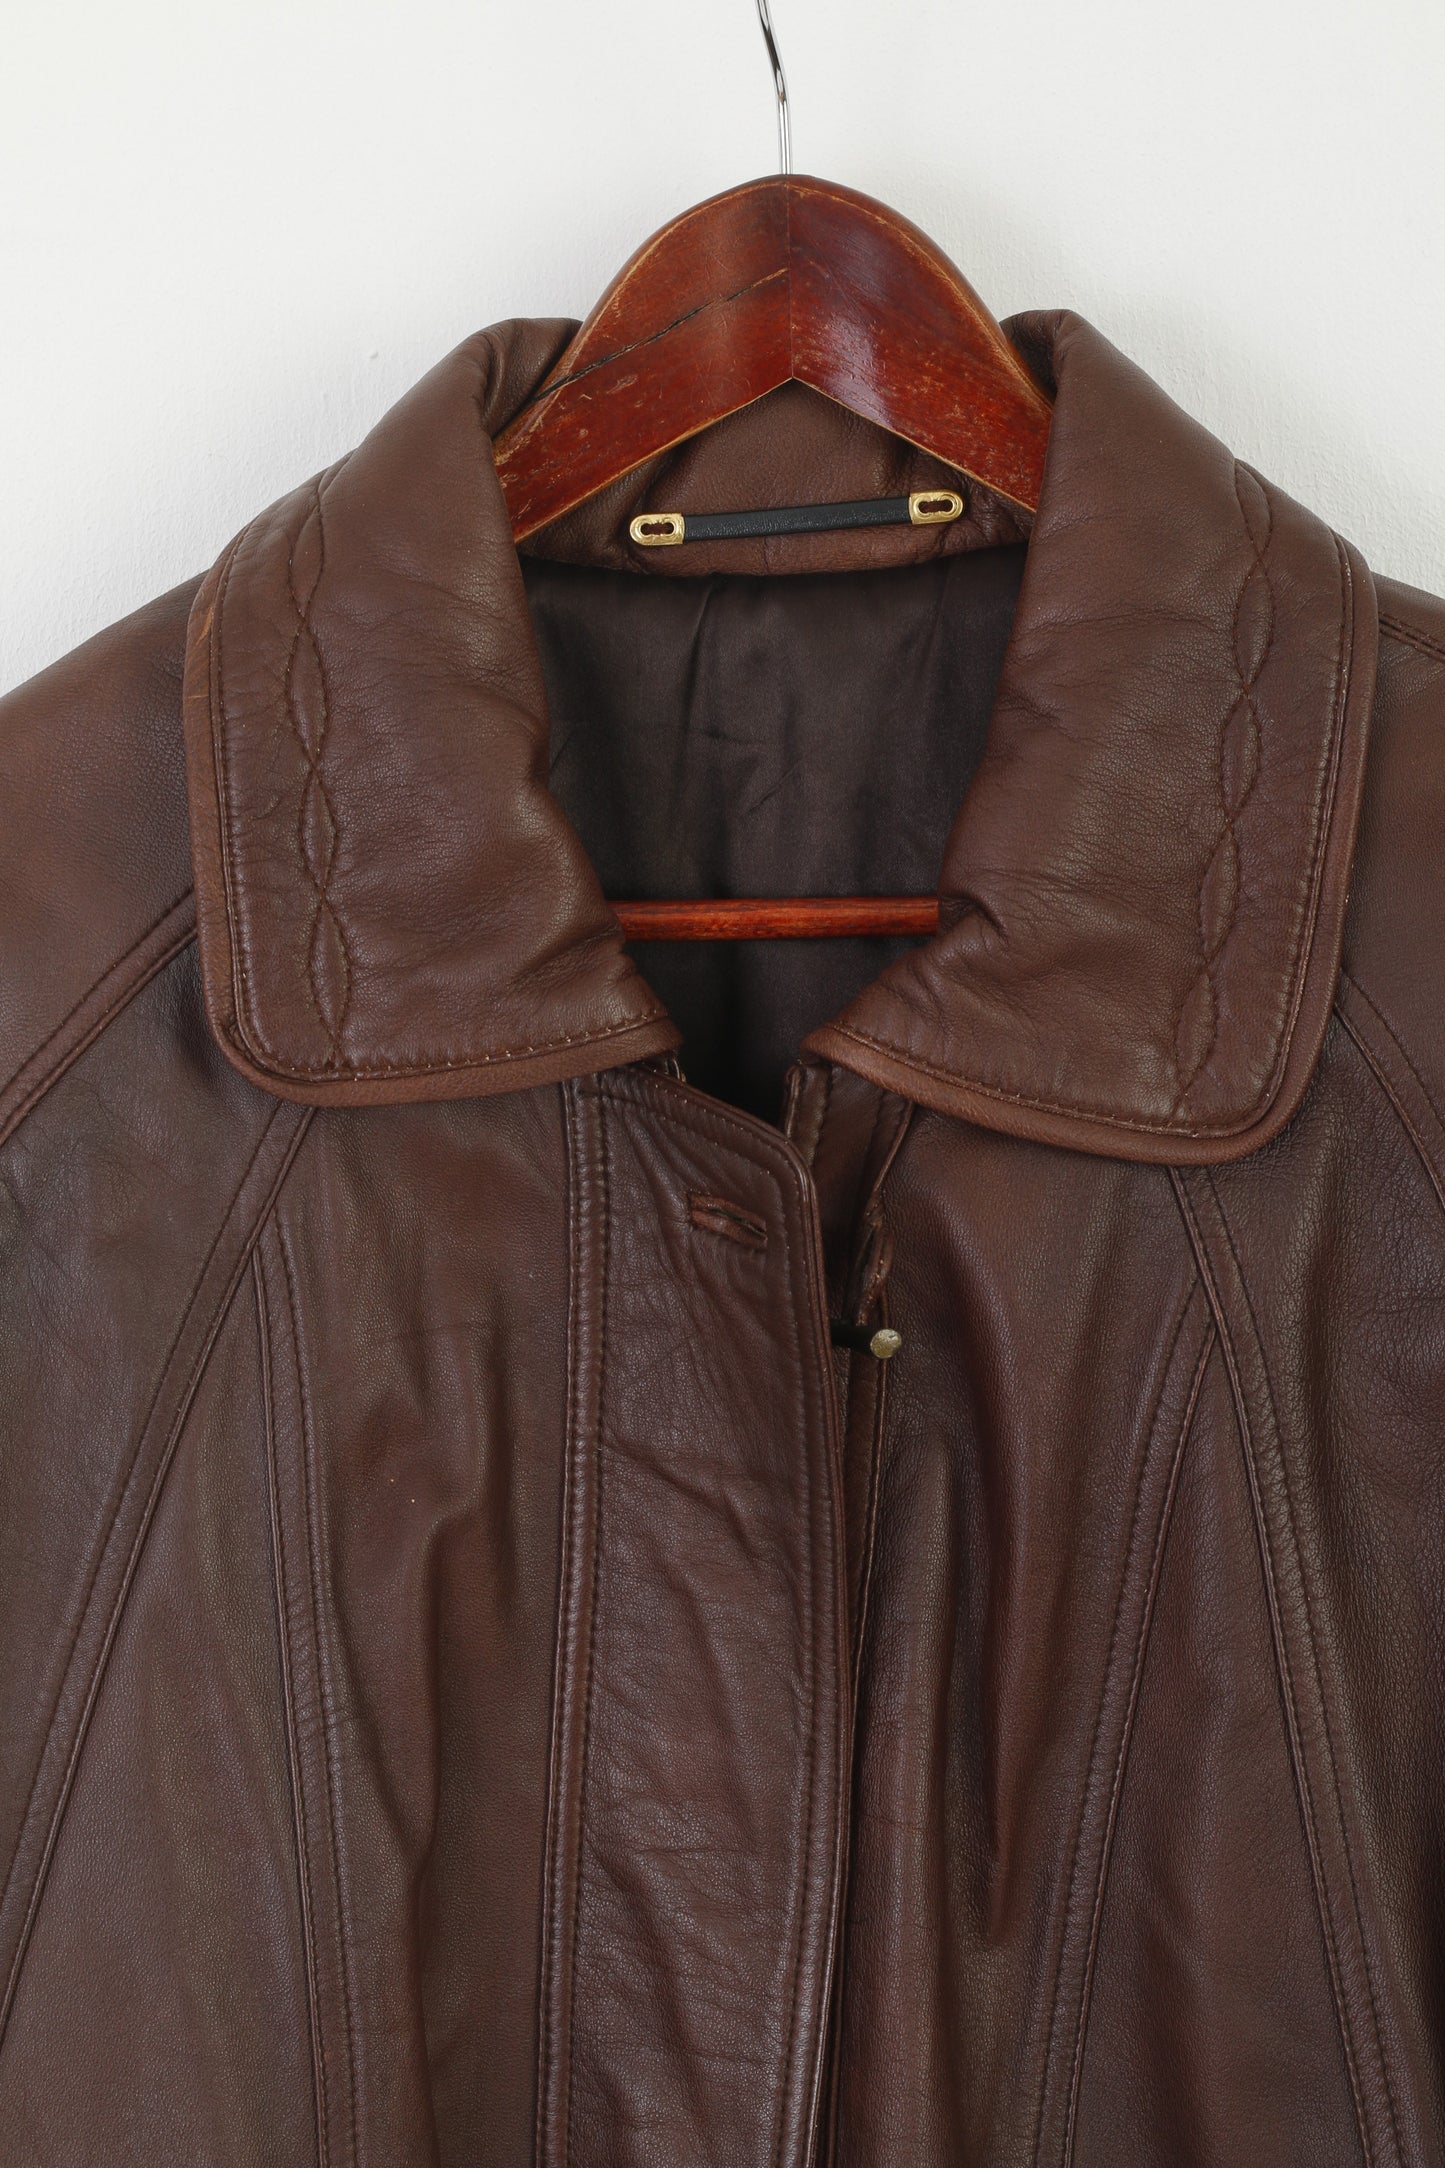 C&A Your 6th Sense Women 14 40 Jacket Brown Leather Full Zipper Vintage Retro Top